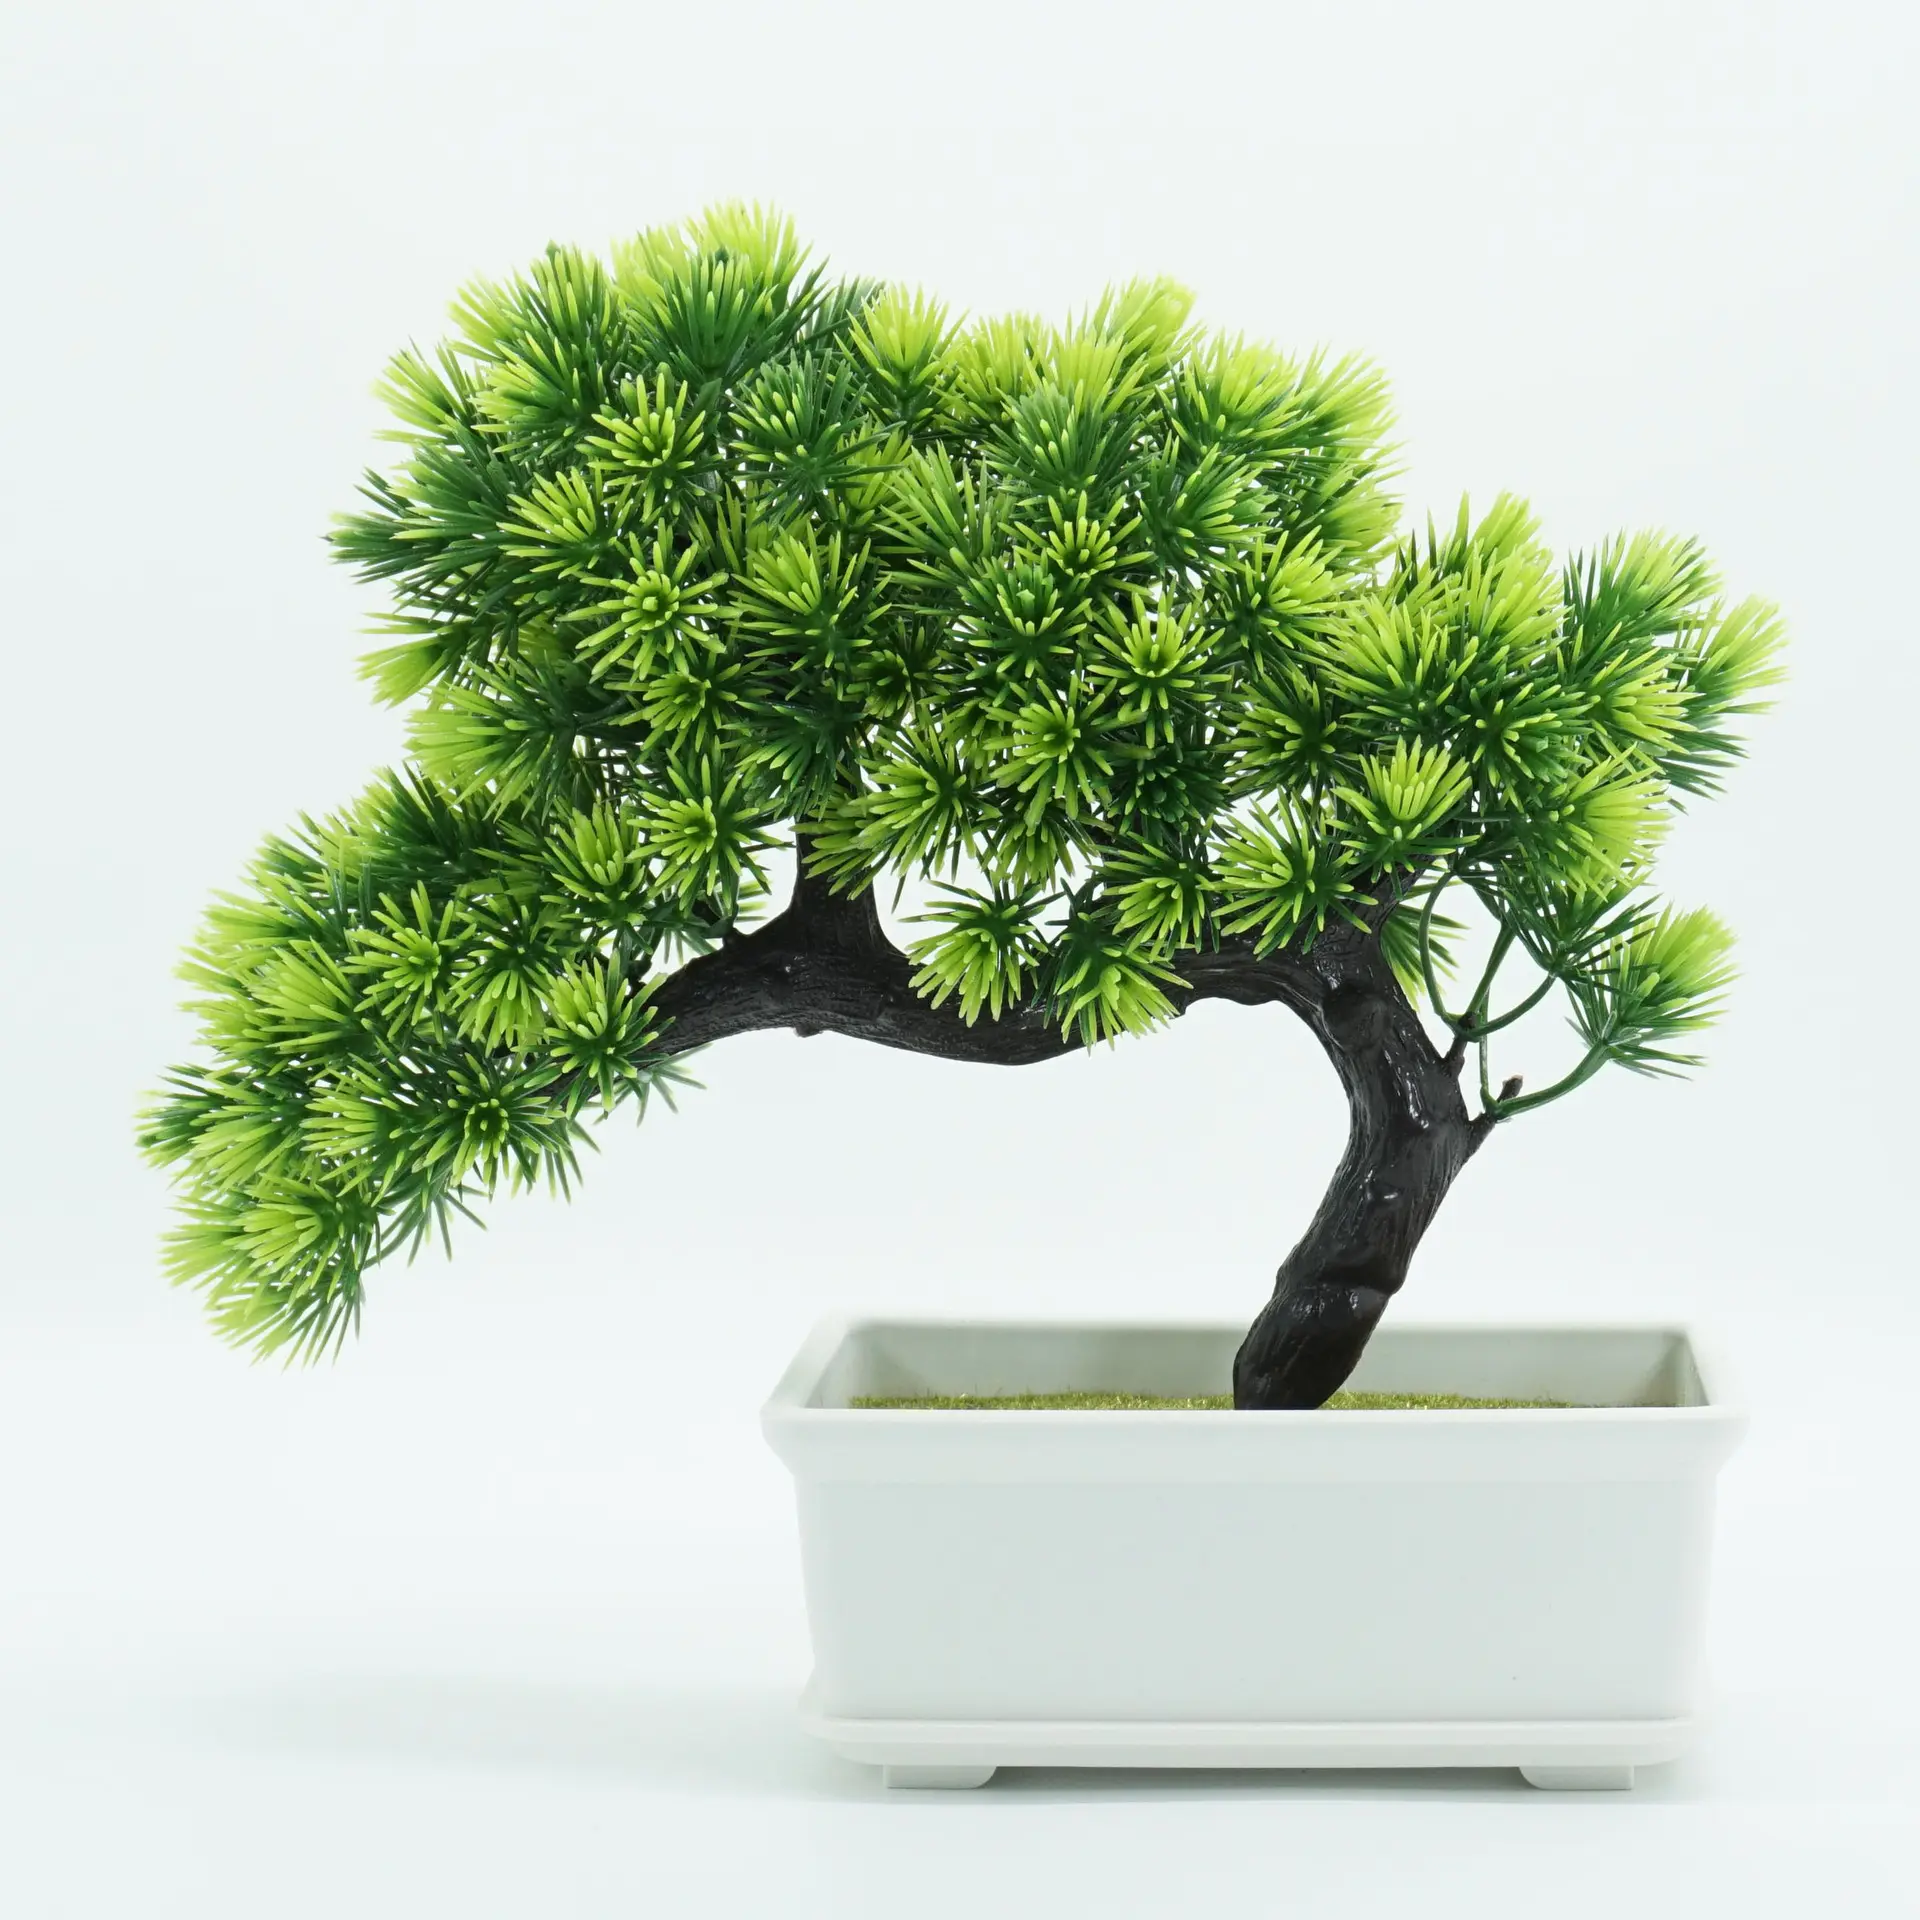 Wholesale desktop bonsai ornament mini green plants plastic artificial bonsai plants for outdoor indoor decoration